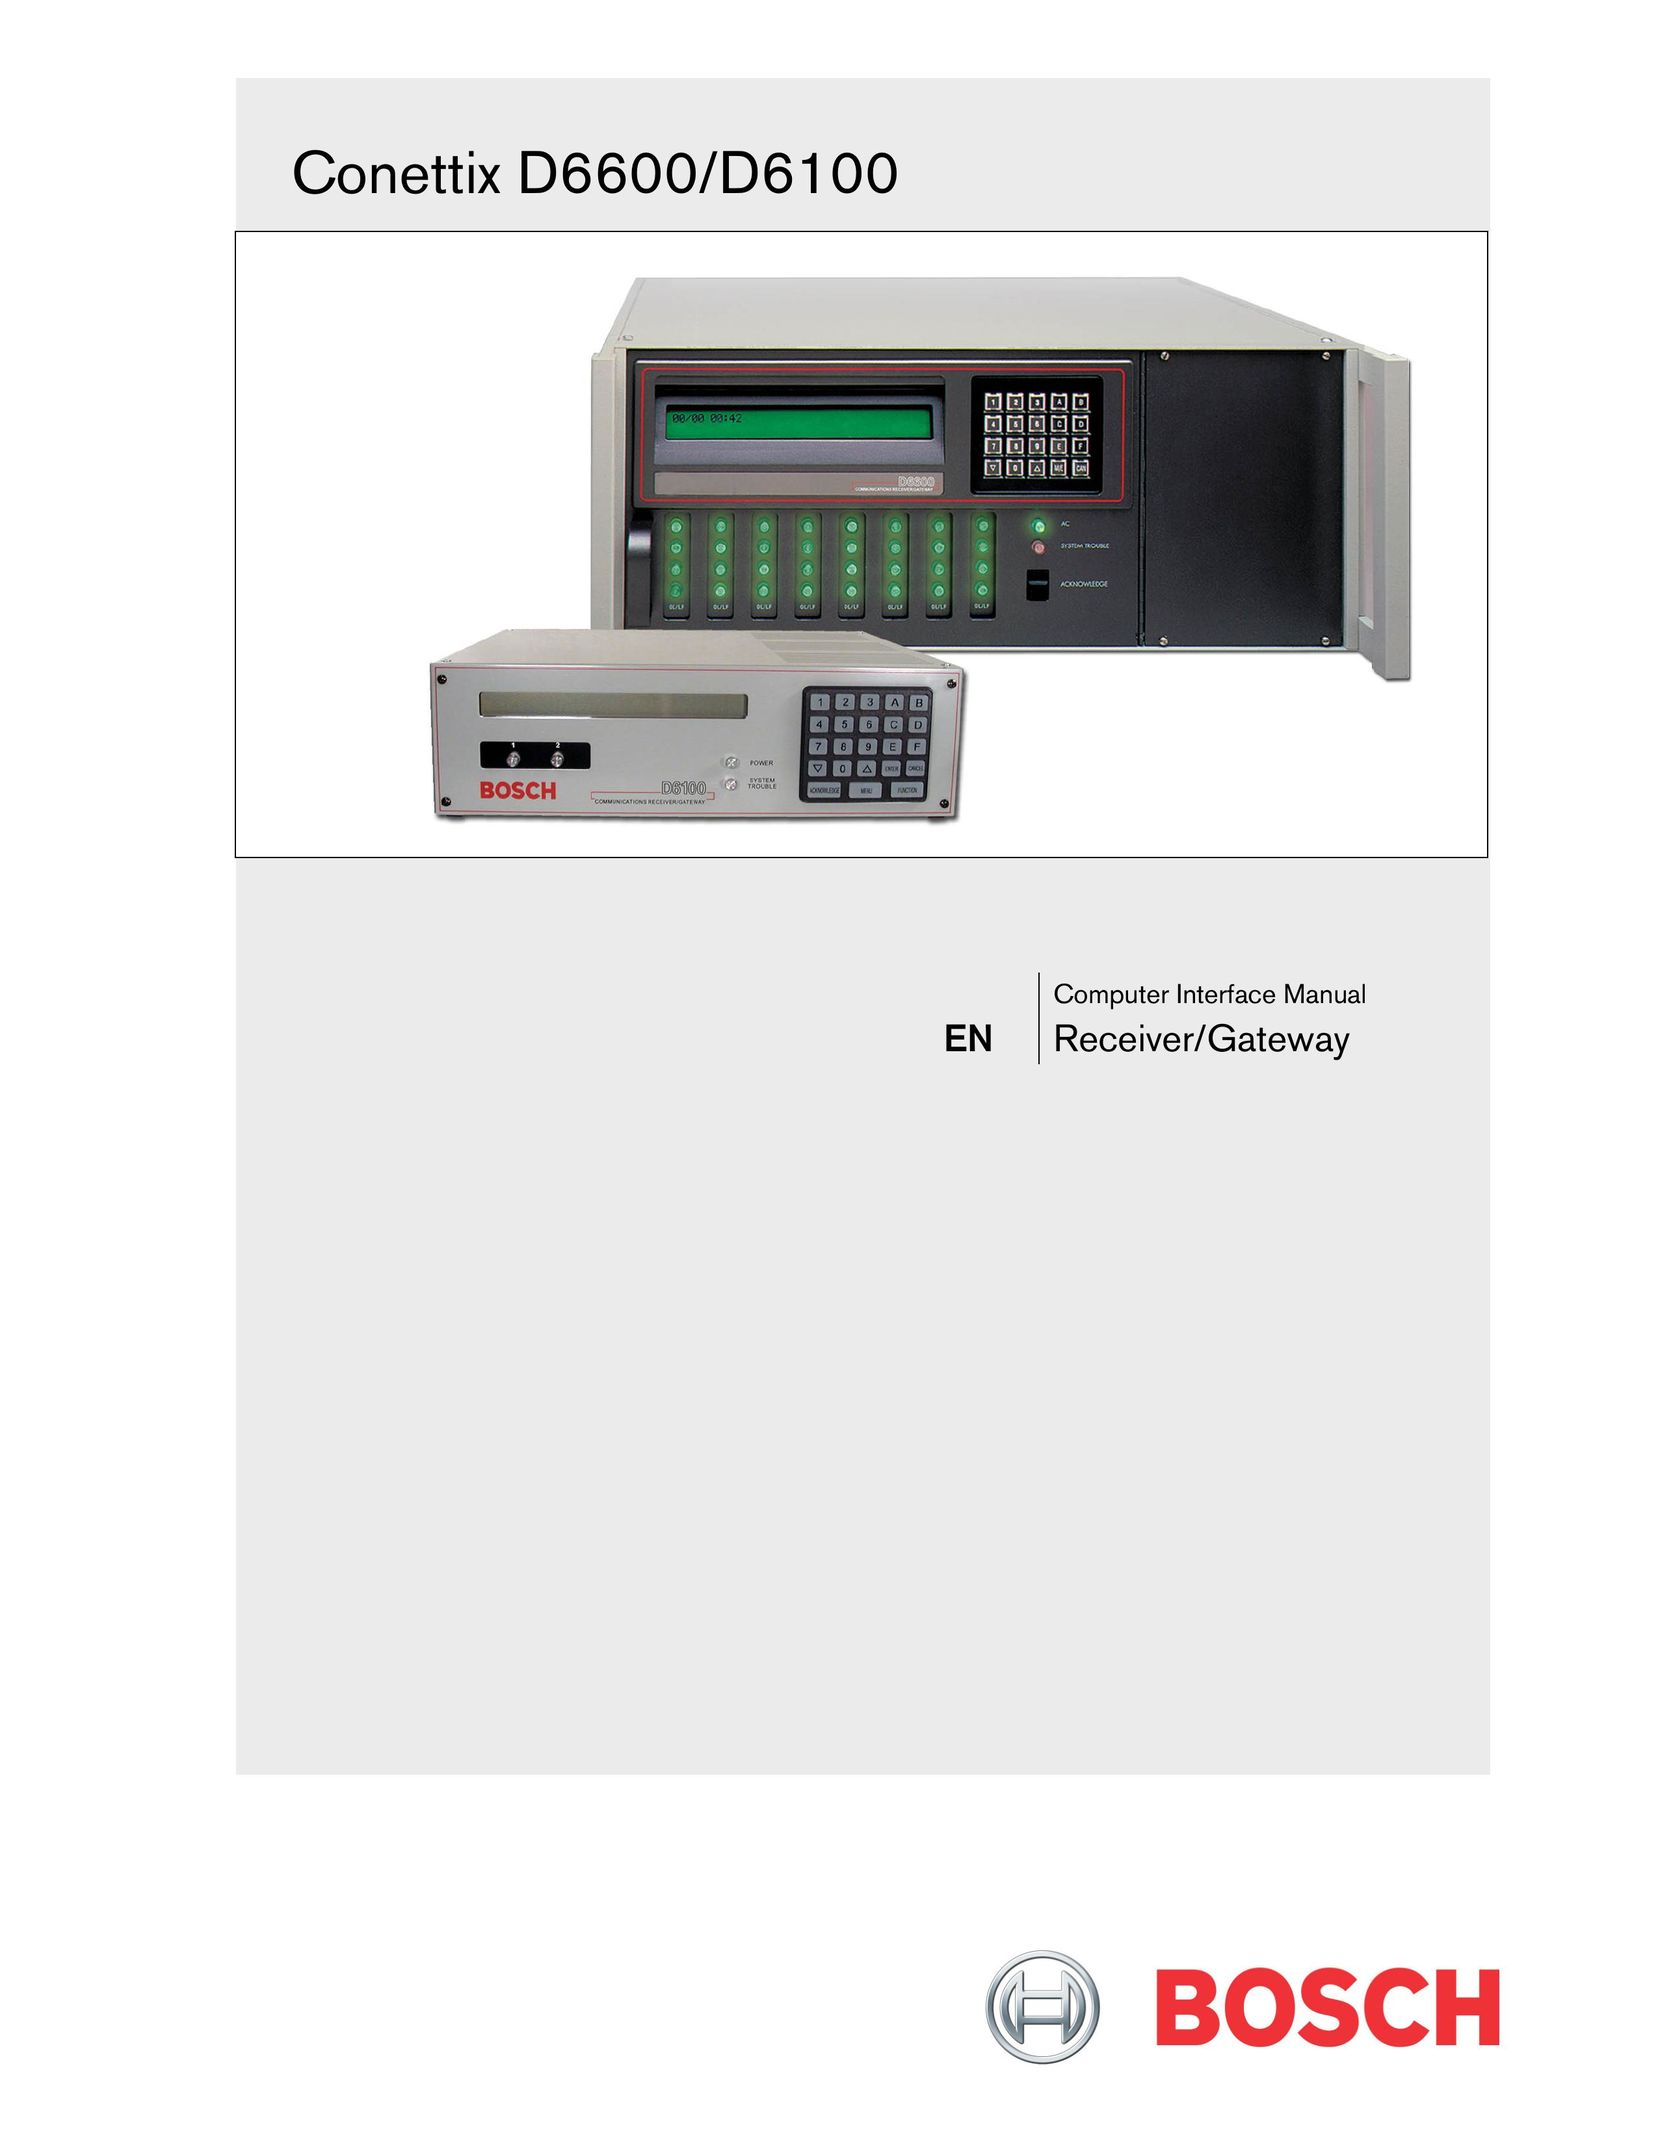 Bosch Appliances D6600 Network Router User Manual